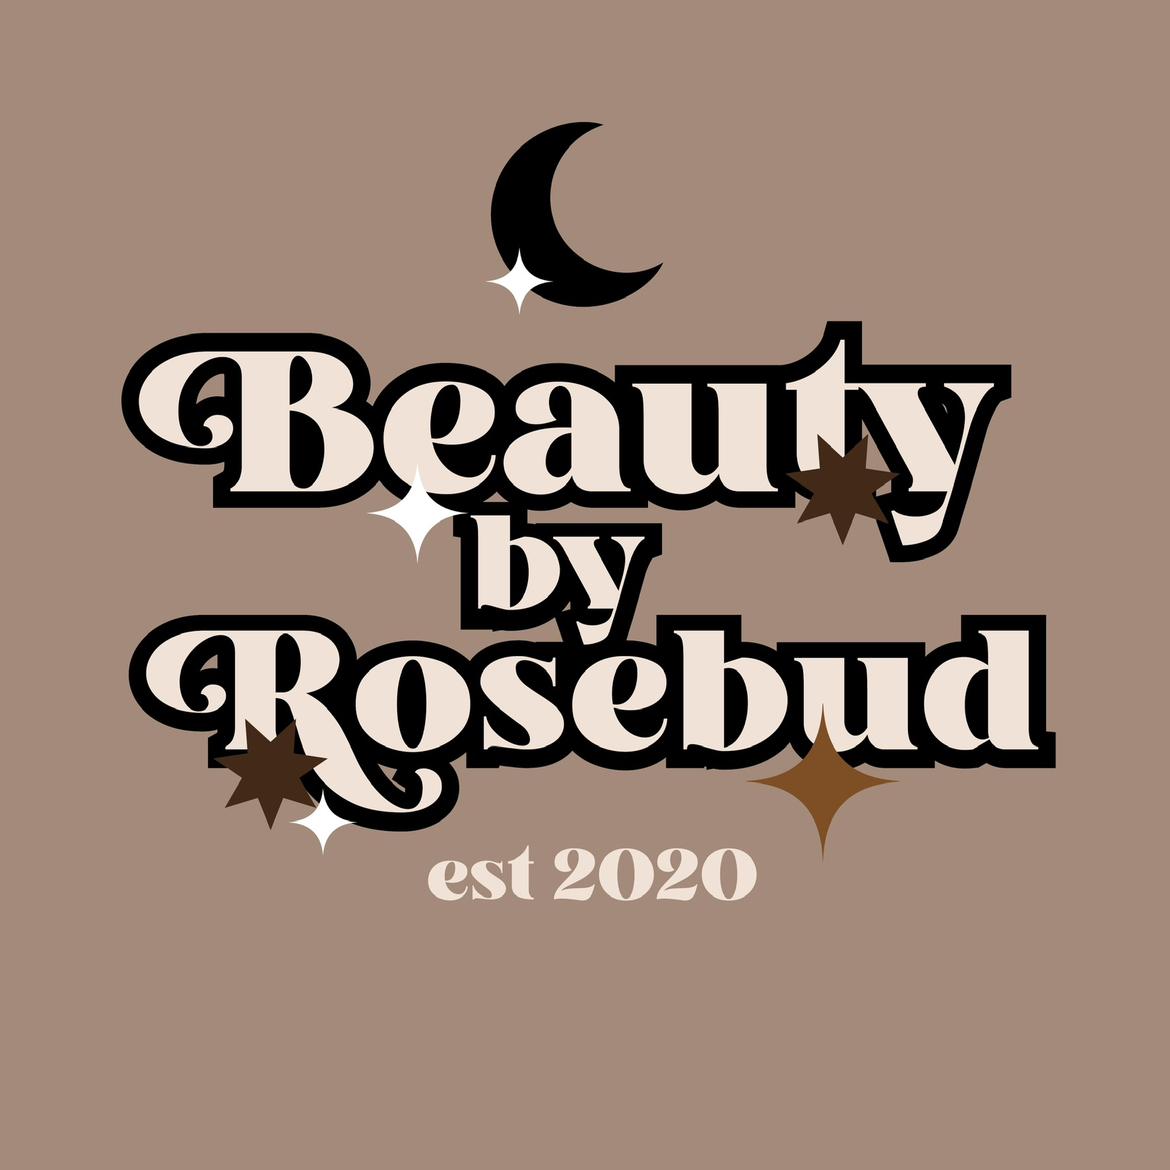 BeautybyRosebud's images